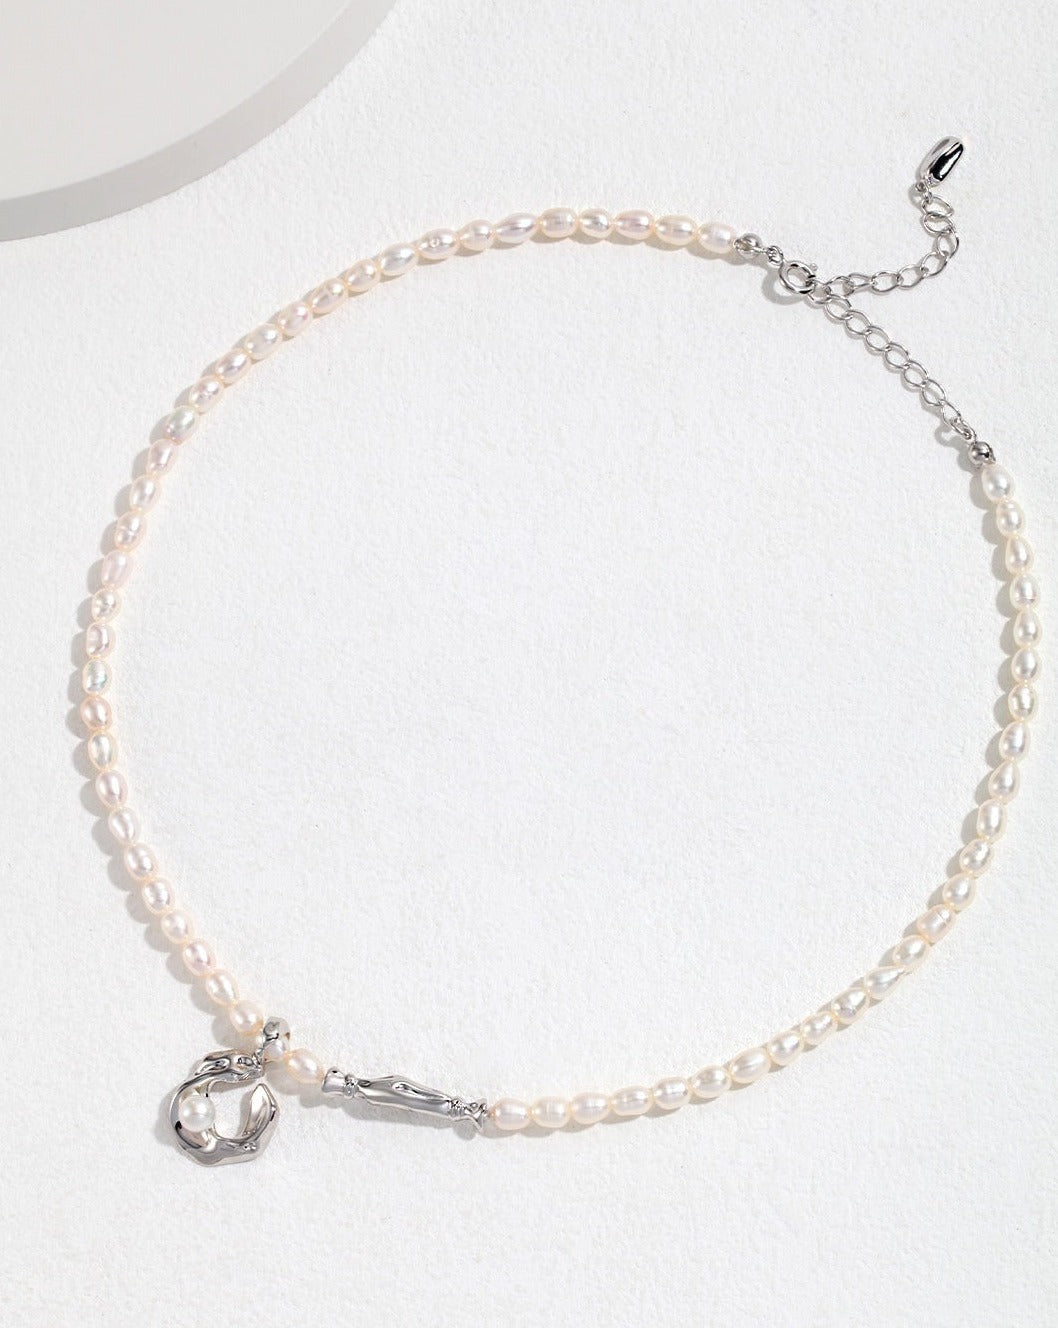 fashion-jewelry-minimalist-jewelry-design-jewelry-statement-necklace-pearl-earring-bracelet-rings-gold-coated-silver-bijoux-scarf-shape-pearl-necklace-earrings-retro-gold